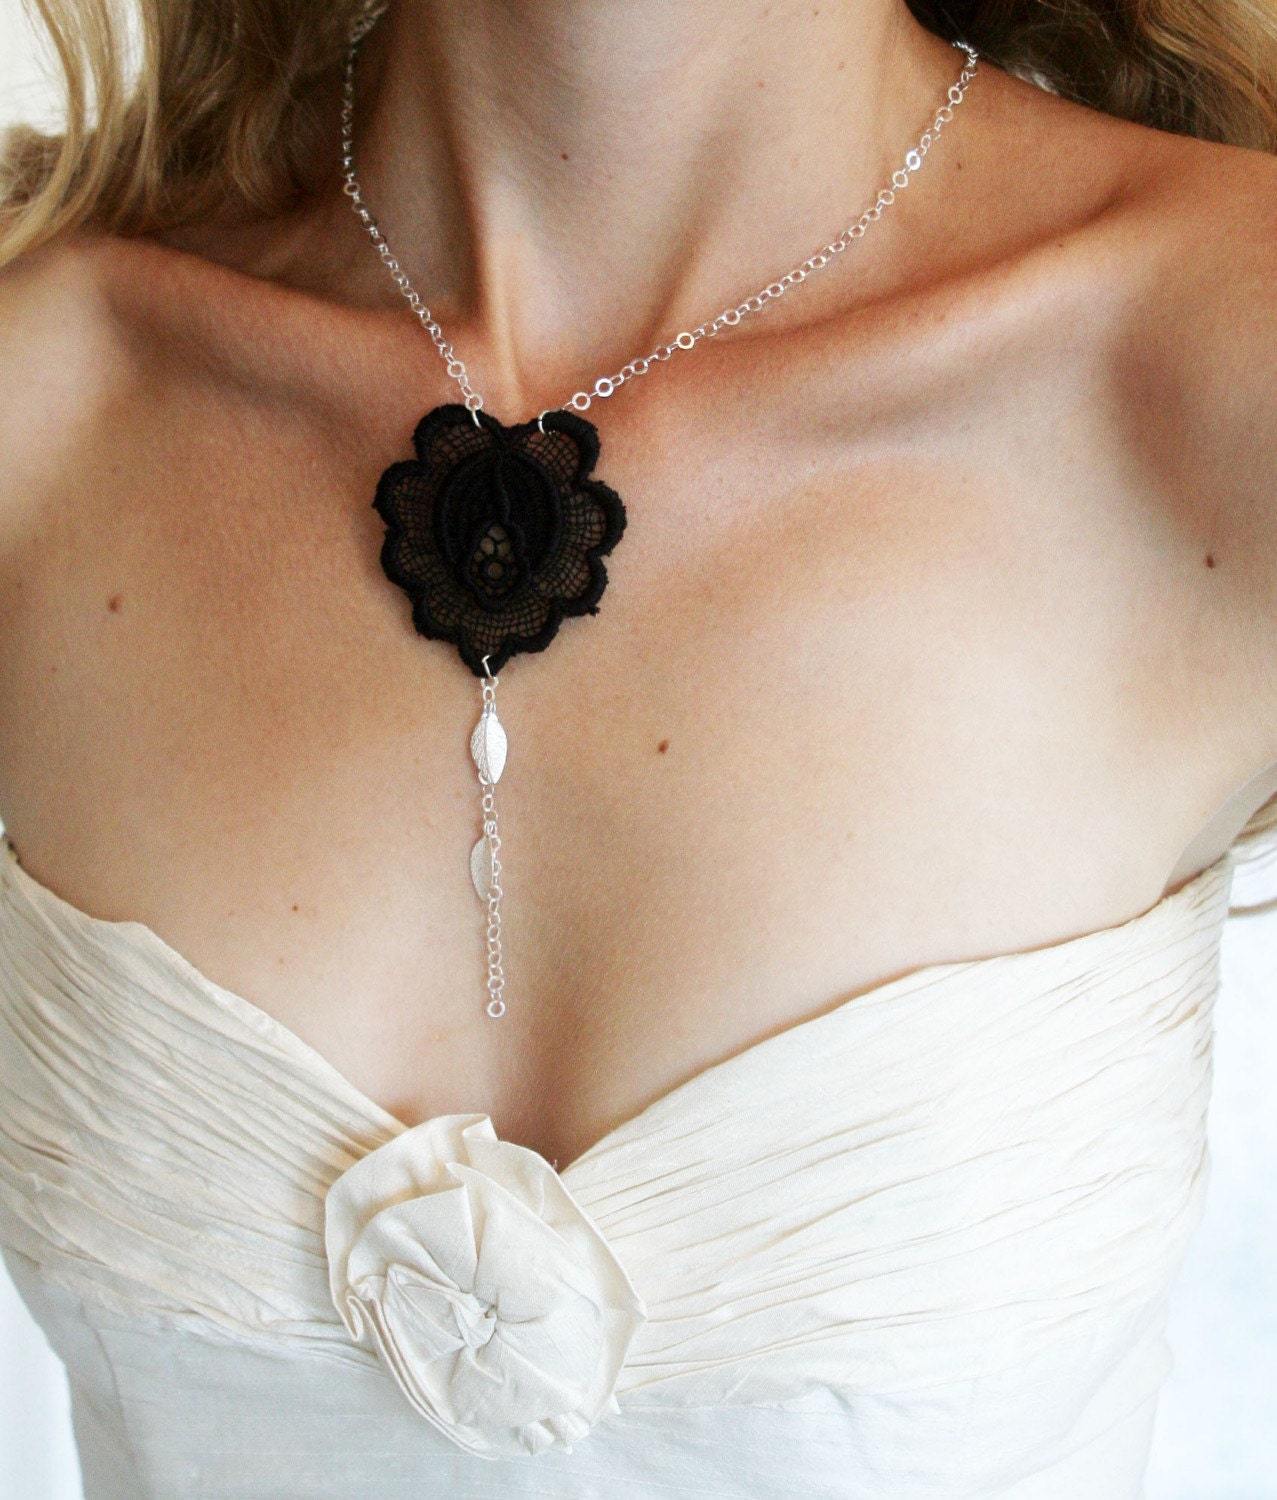 Charlotte's black flower necklace